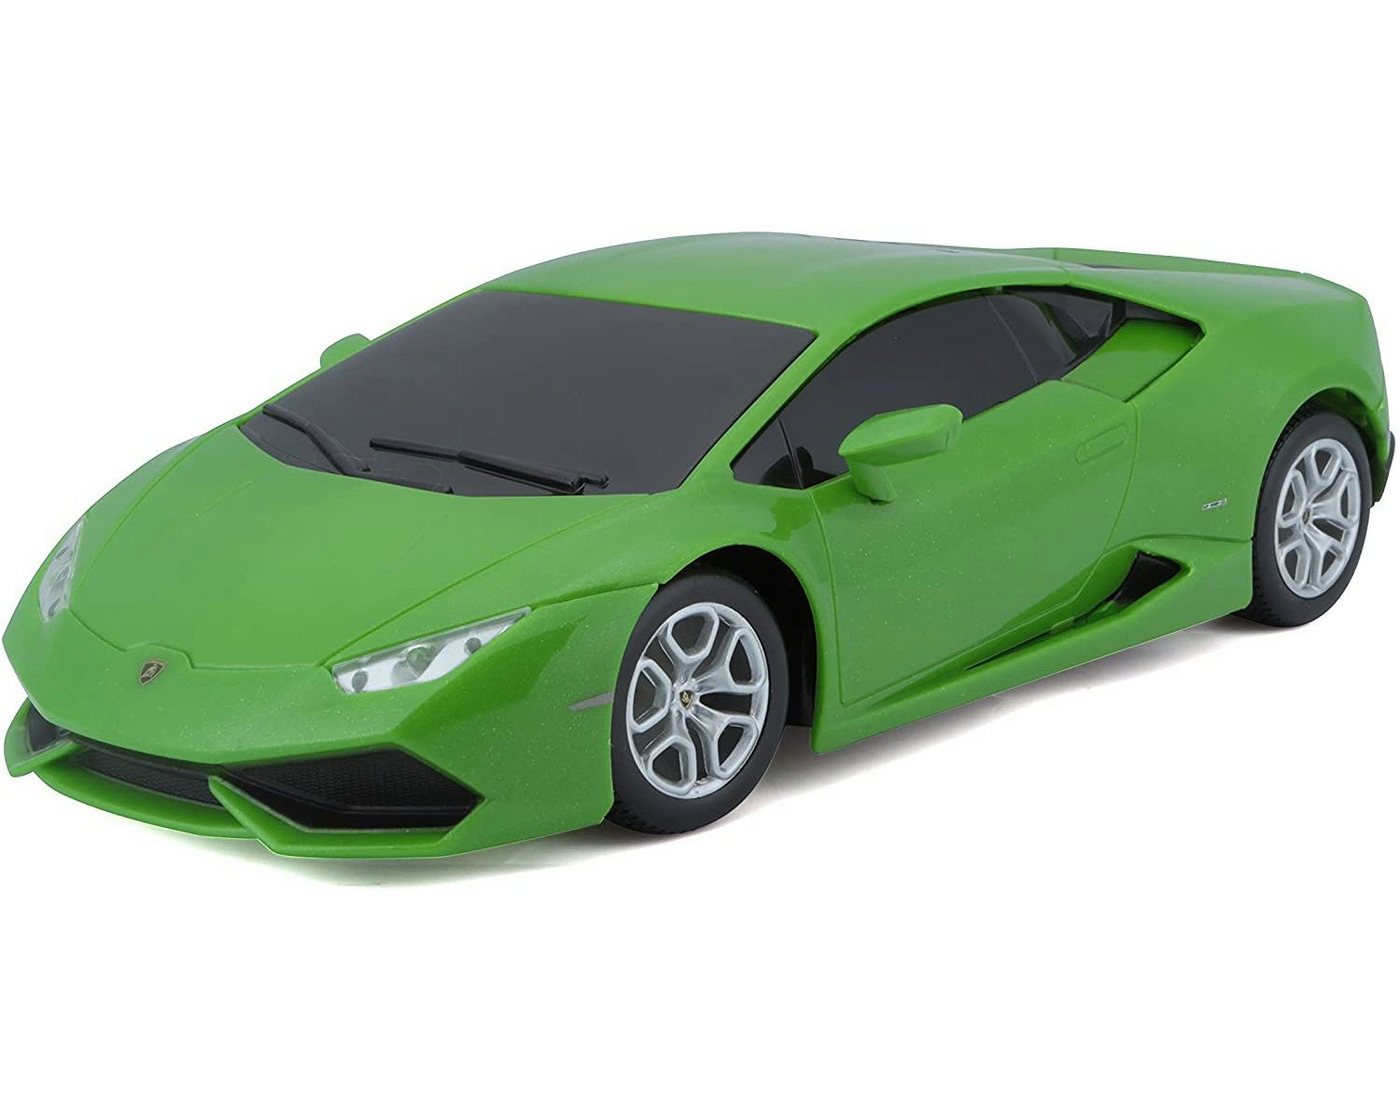 Maisto Tech RC-Auto Ferngesteuertes Auto - Lamborghini Huracán (grün, Maßstab 1:24), detailliertes Modell von Maisto Tech